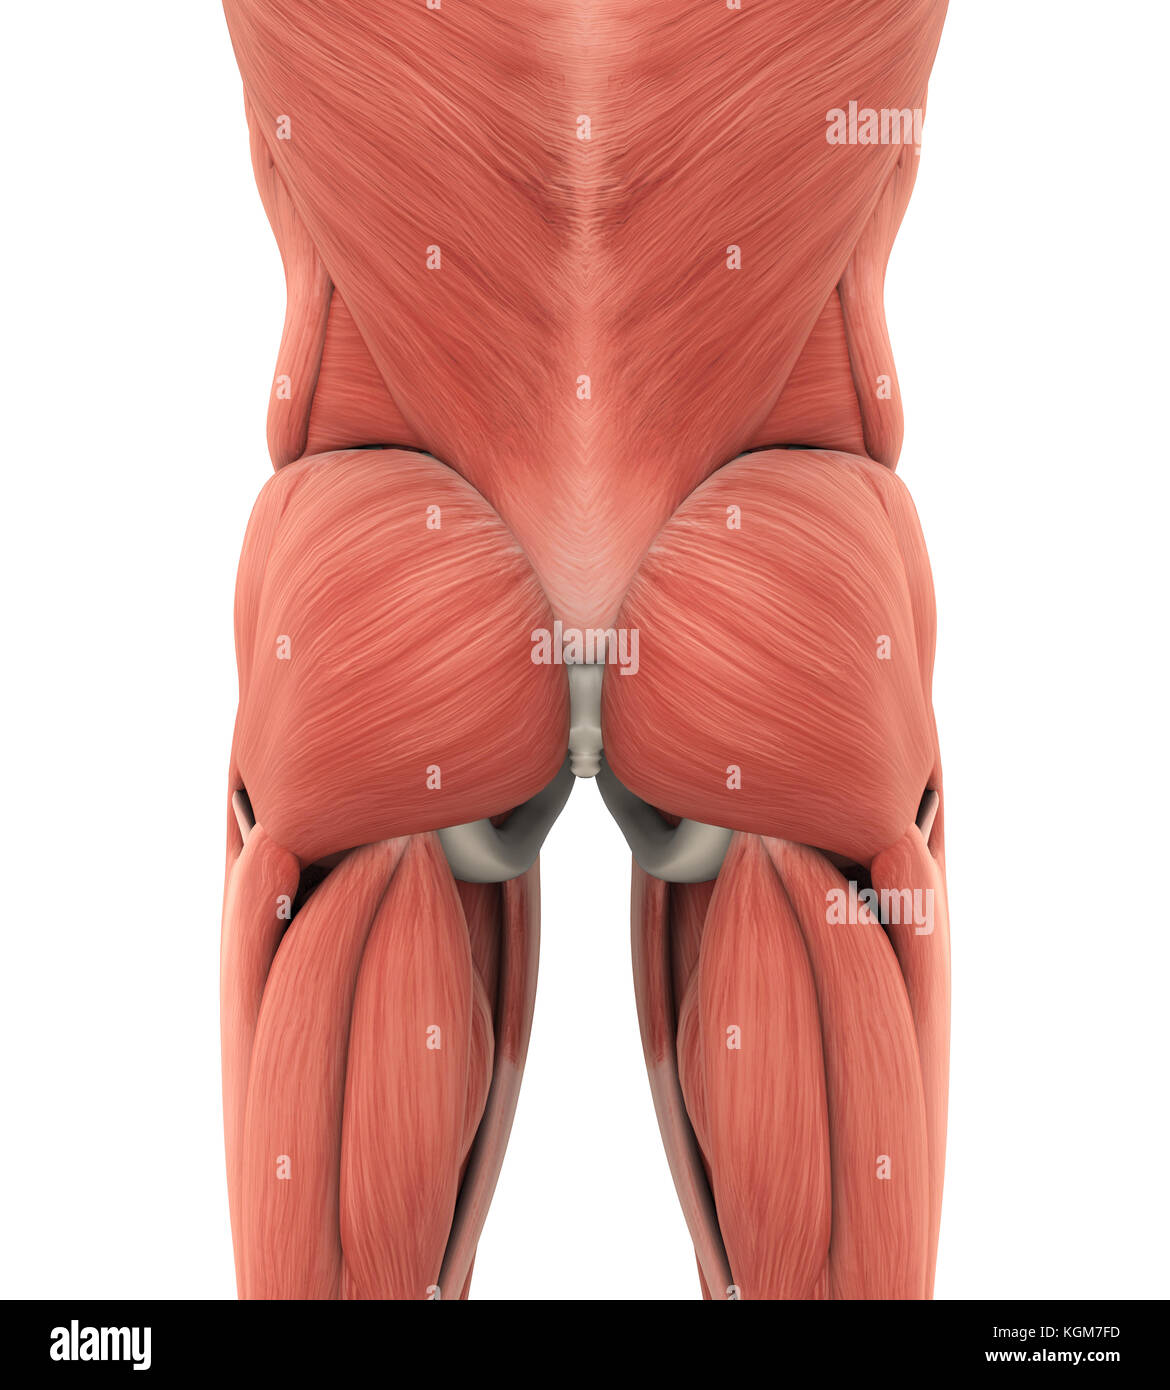 Die gesäßmuskulatur Anatomie Stockfoto